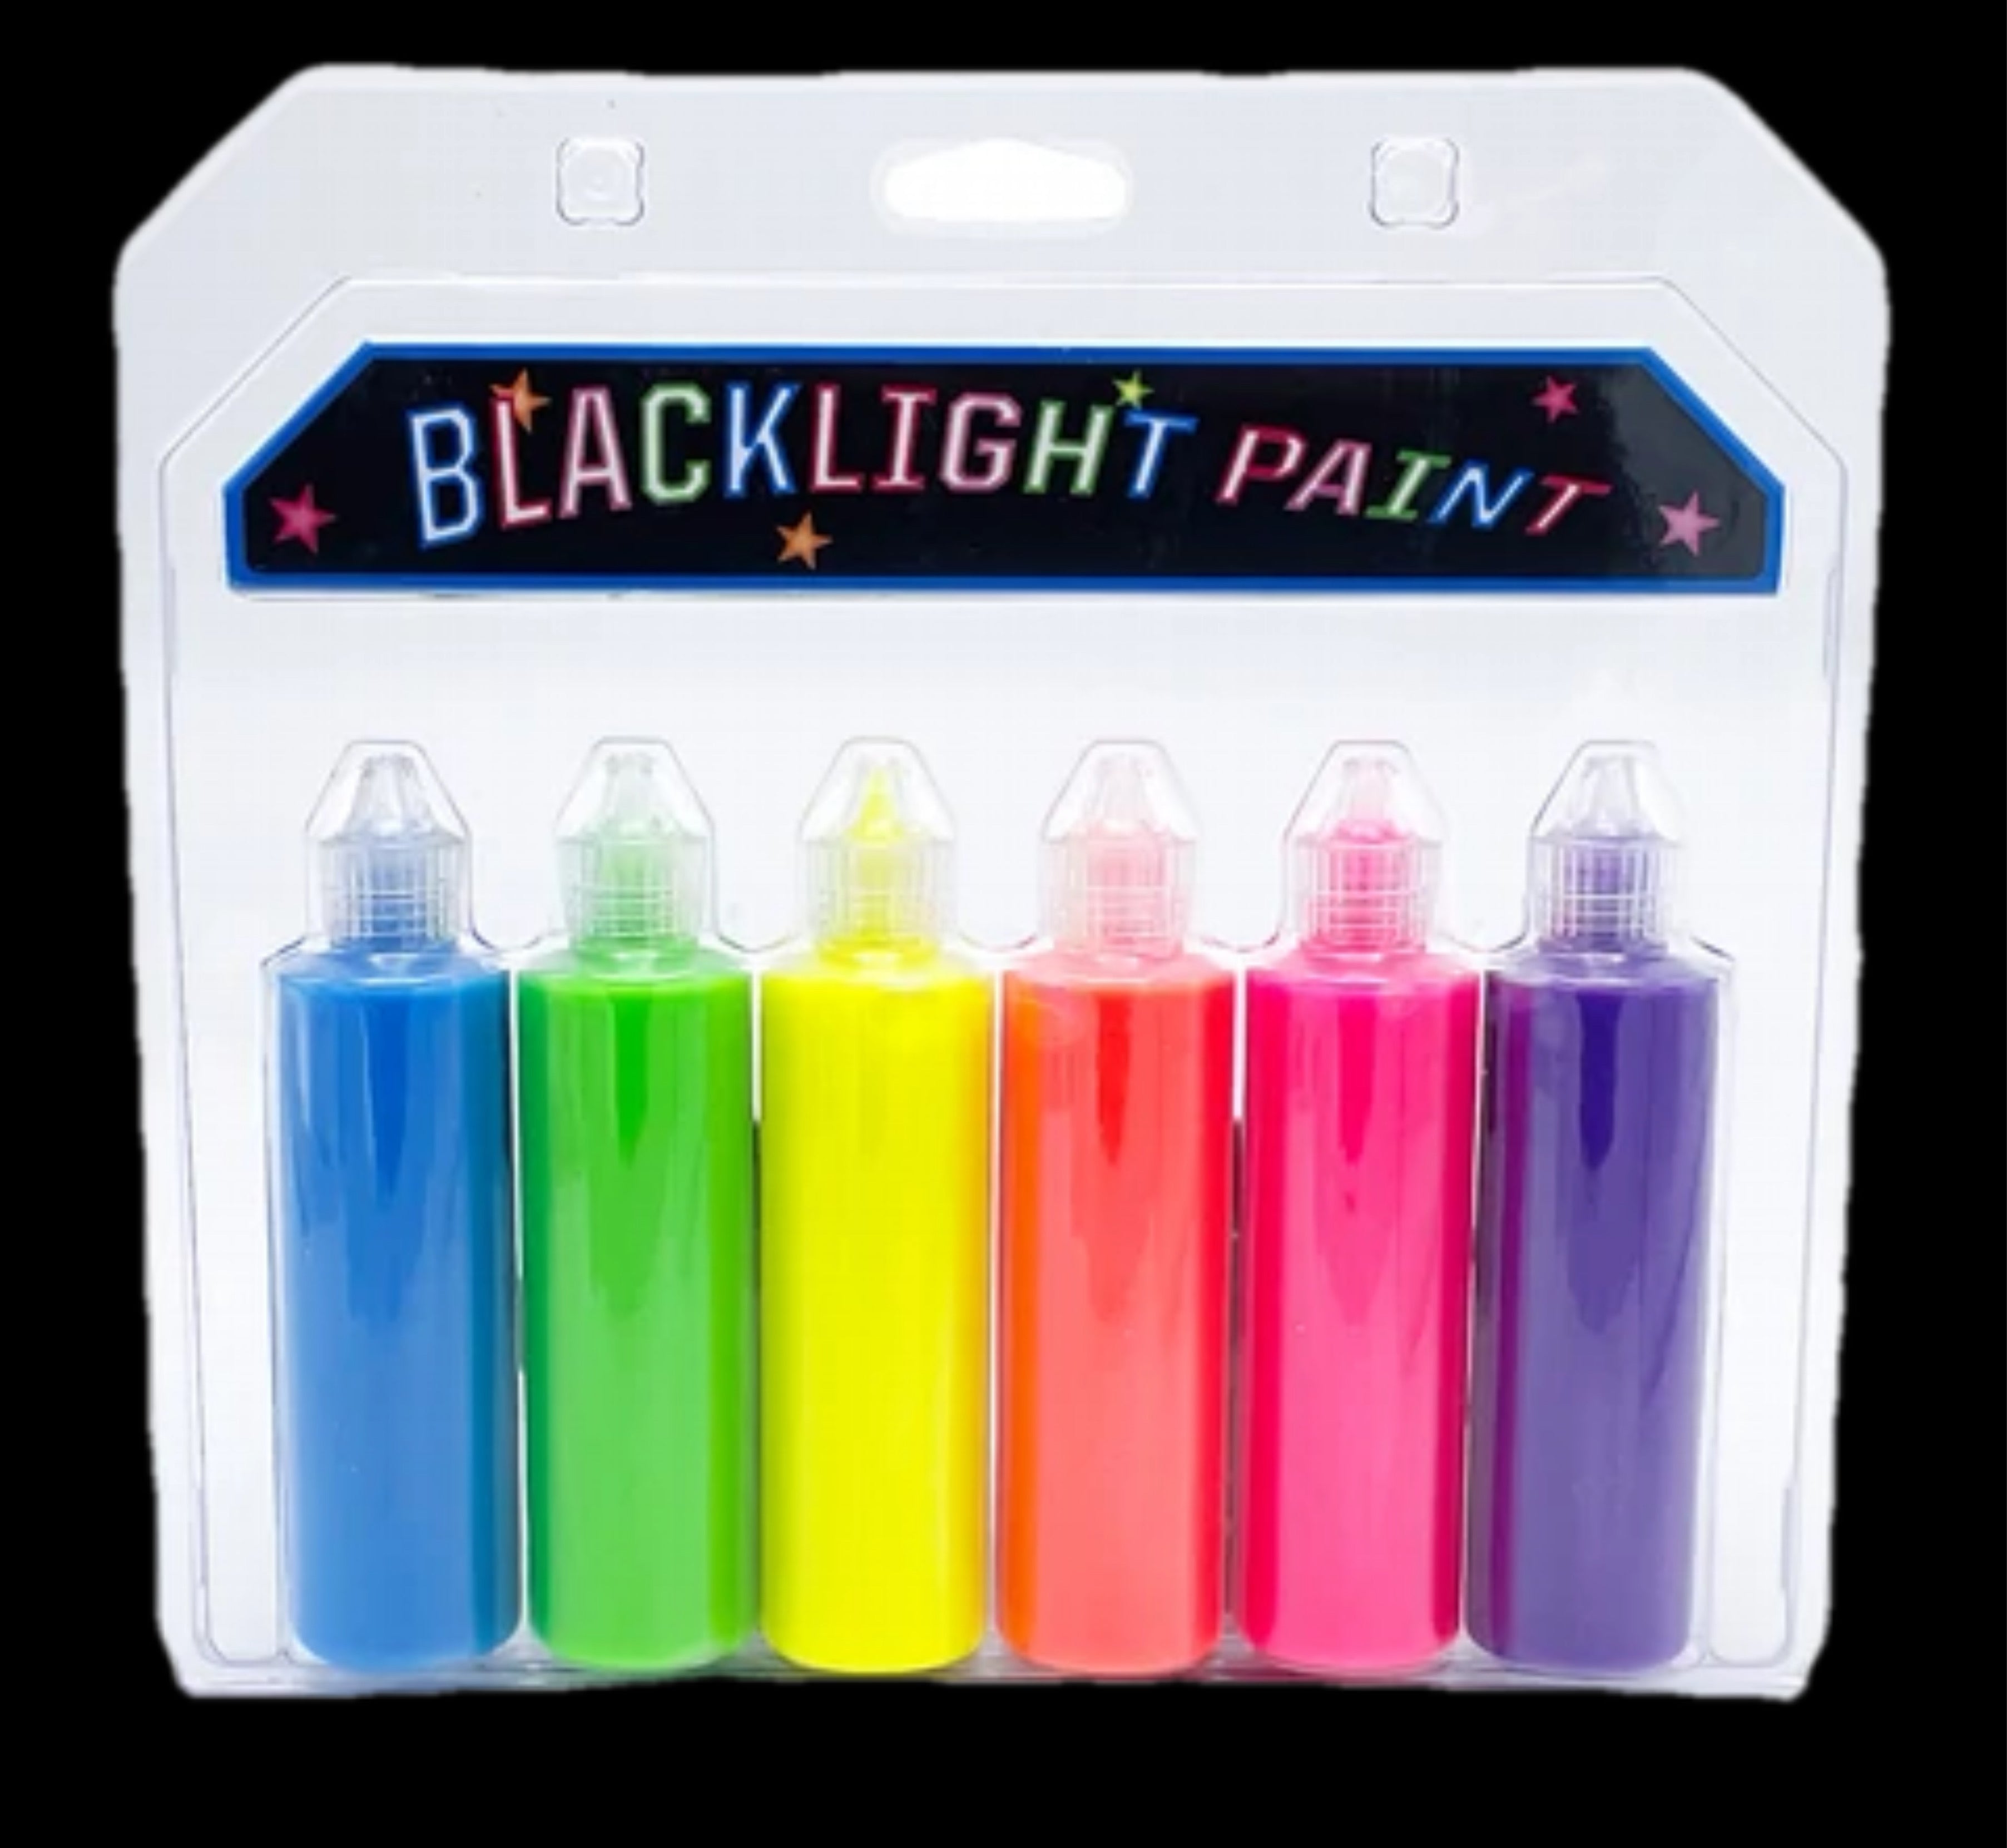 Blacklight Paint – Glow!